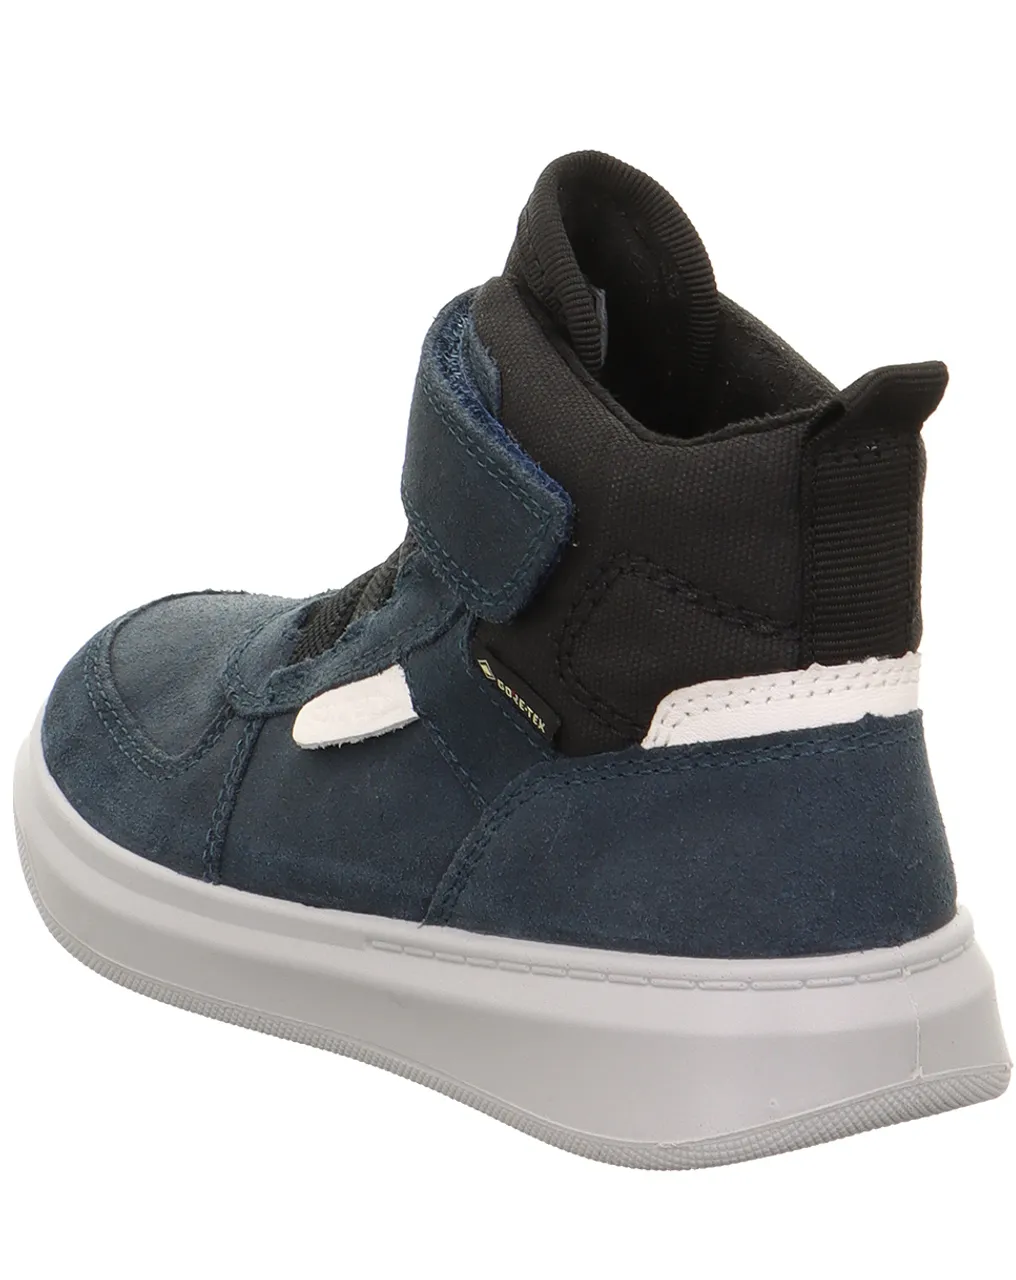 Klett-Schuhe COSMO in blau